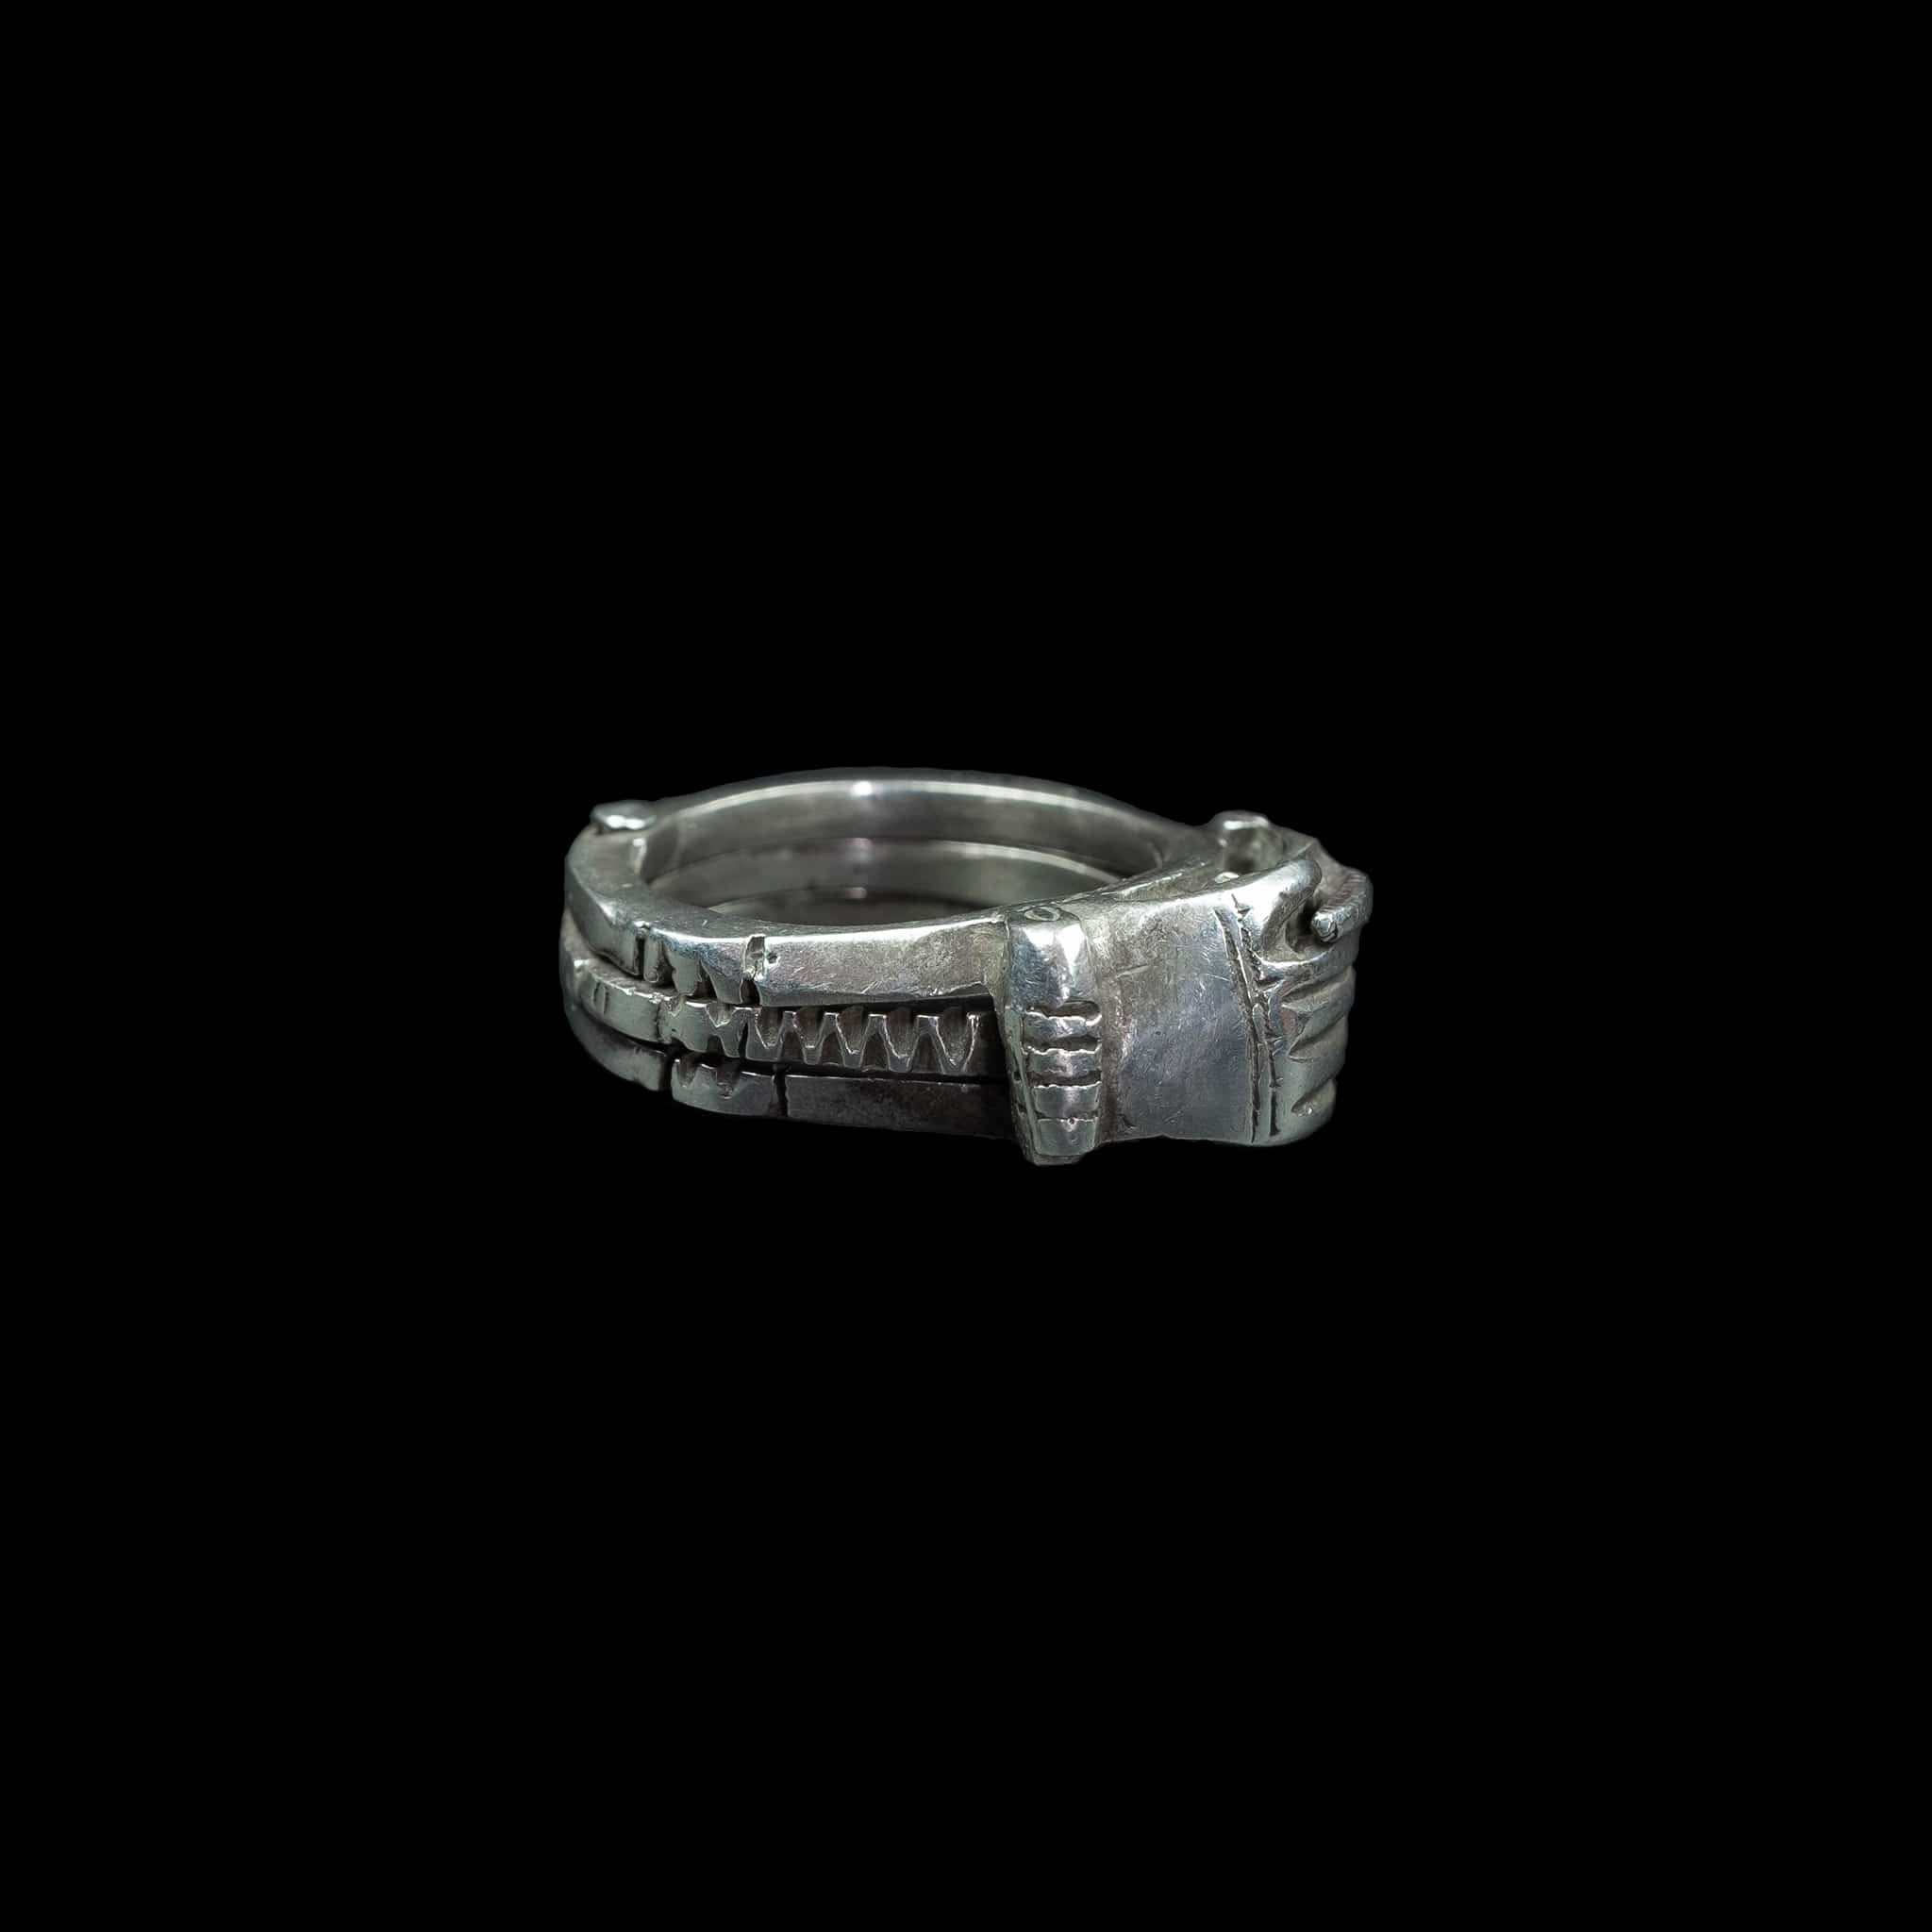 Silver Amazigh (Berber) eternity ring